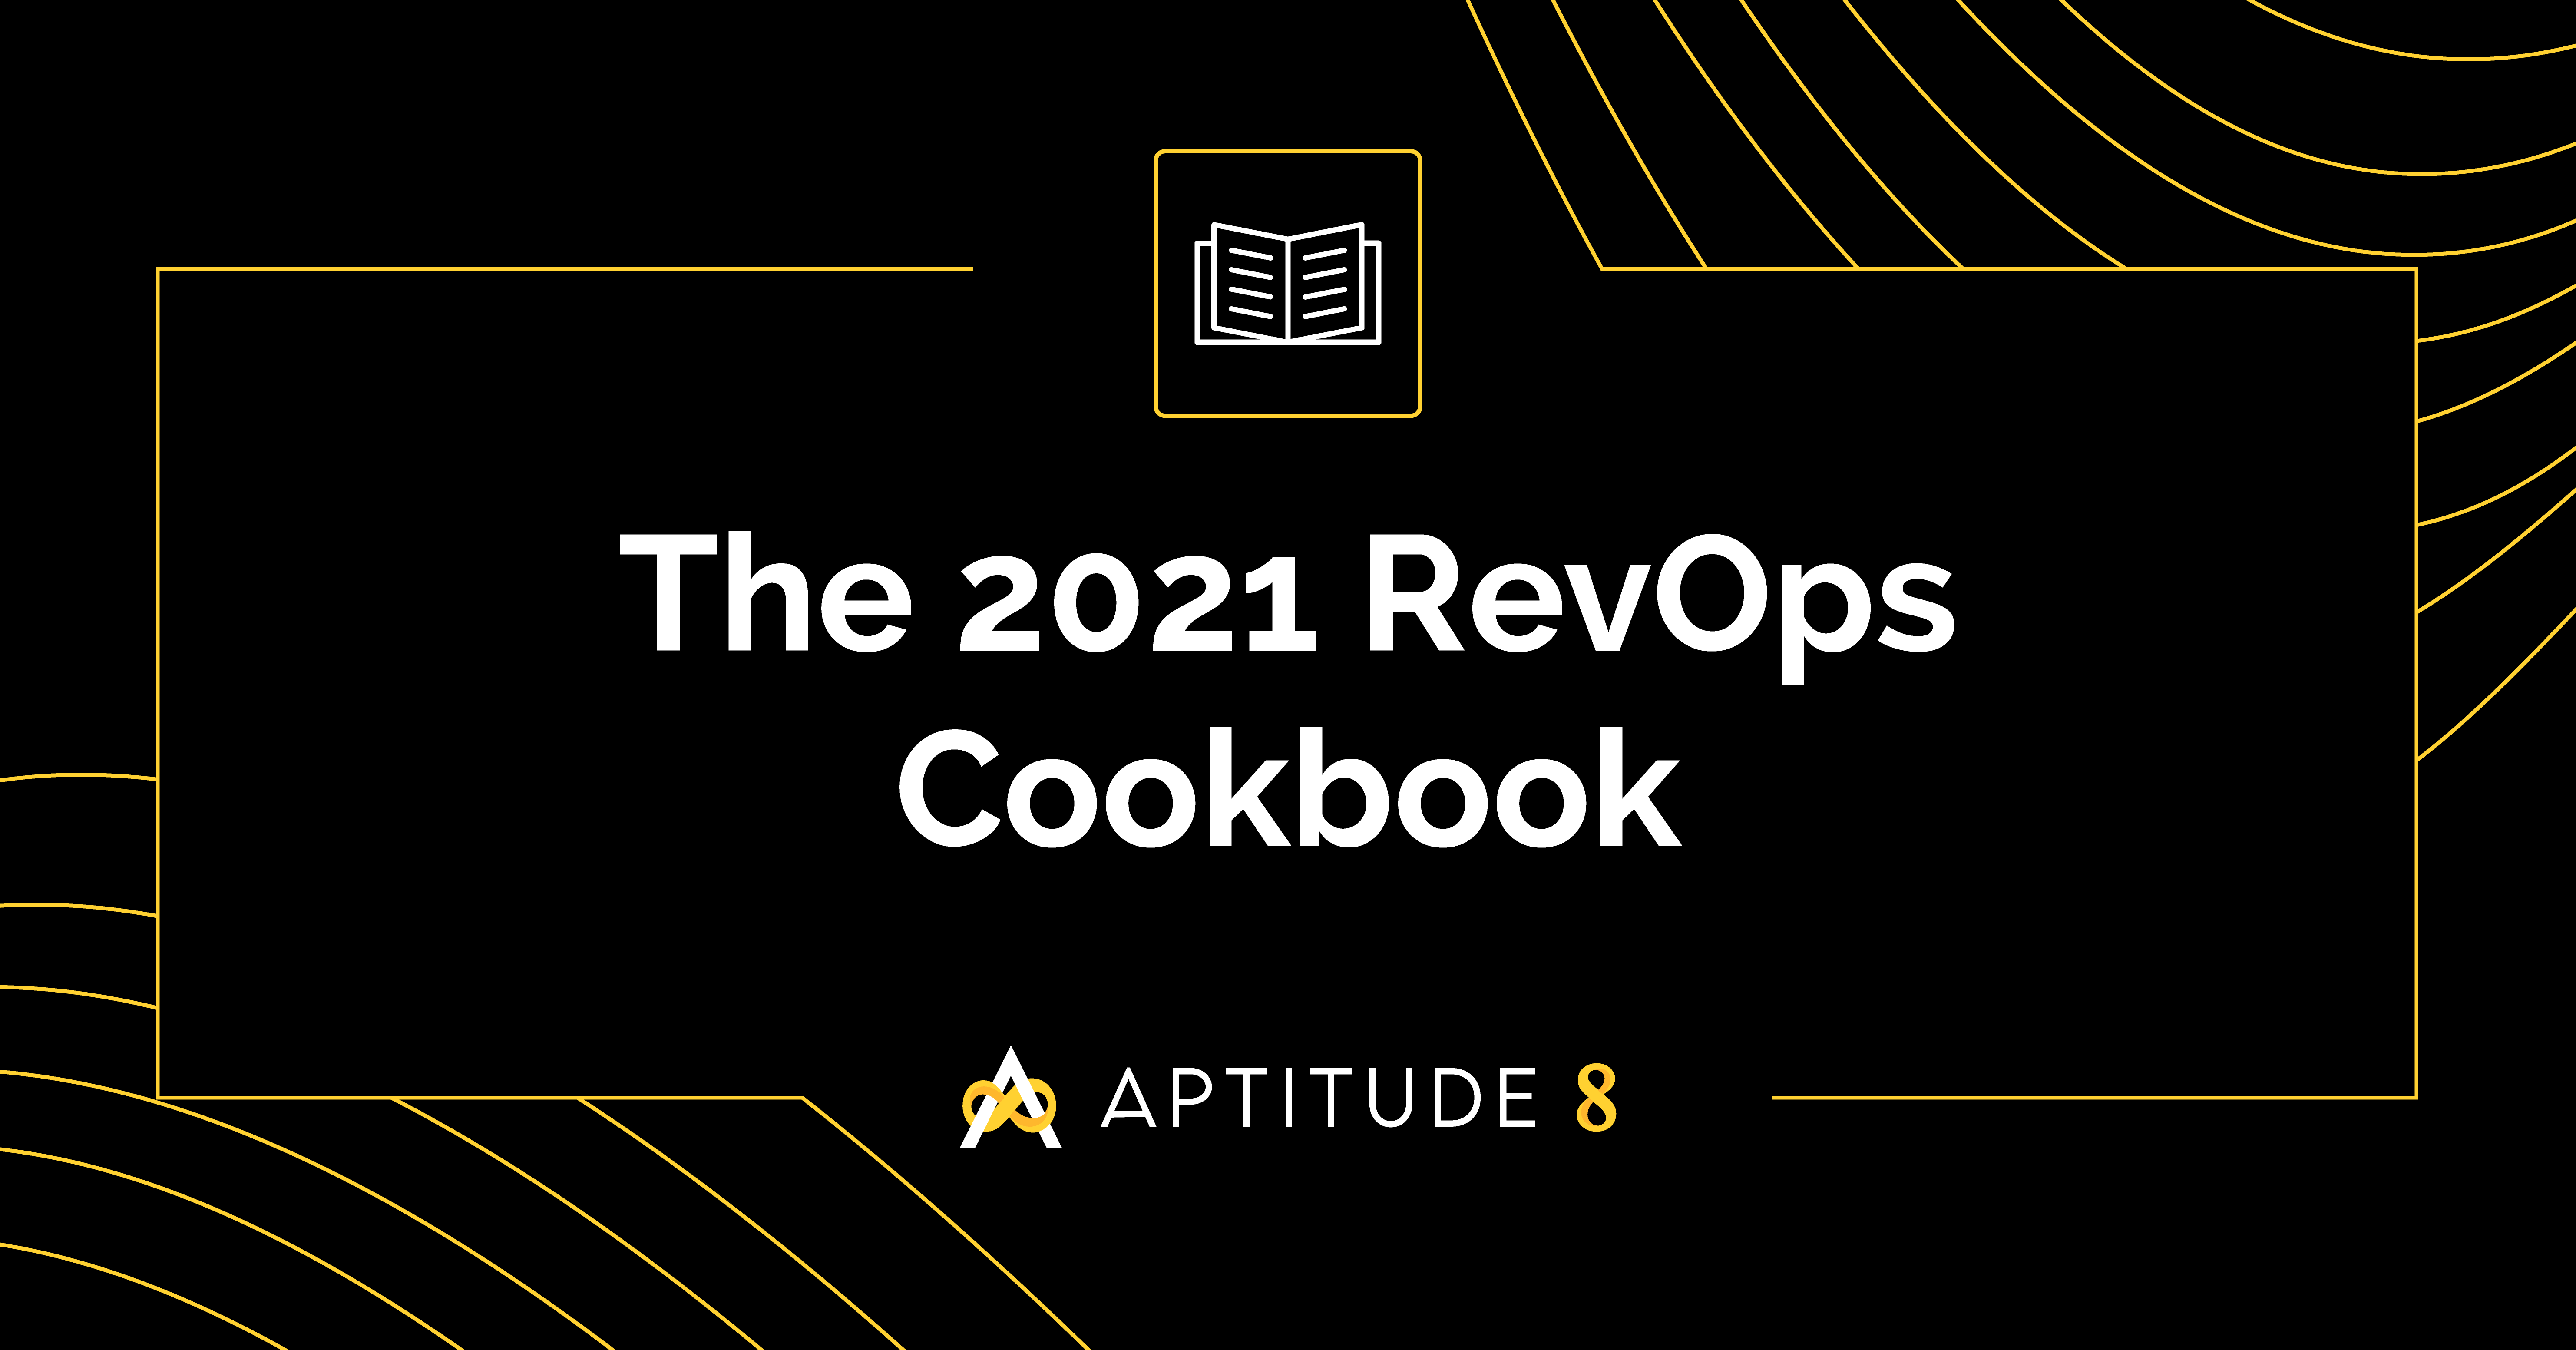 The 2021 Revops Cookbook